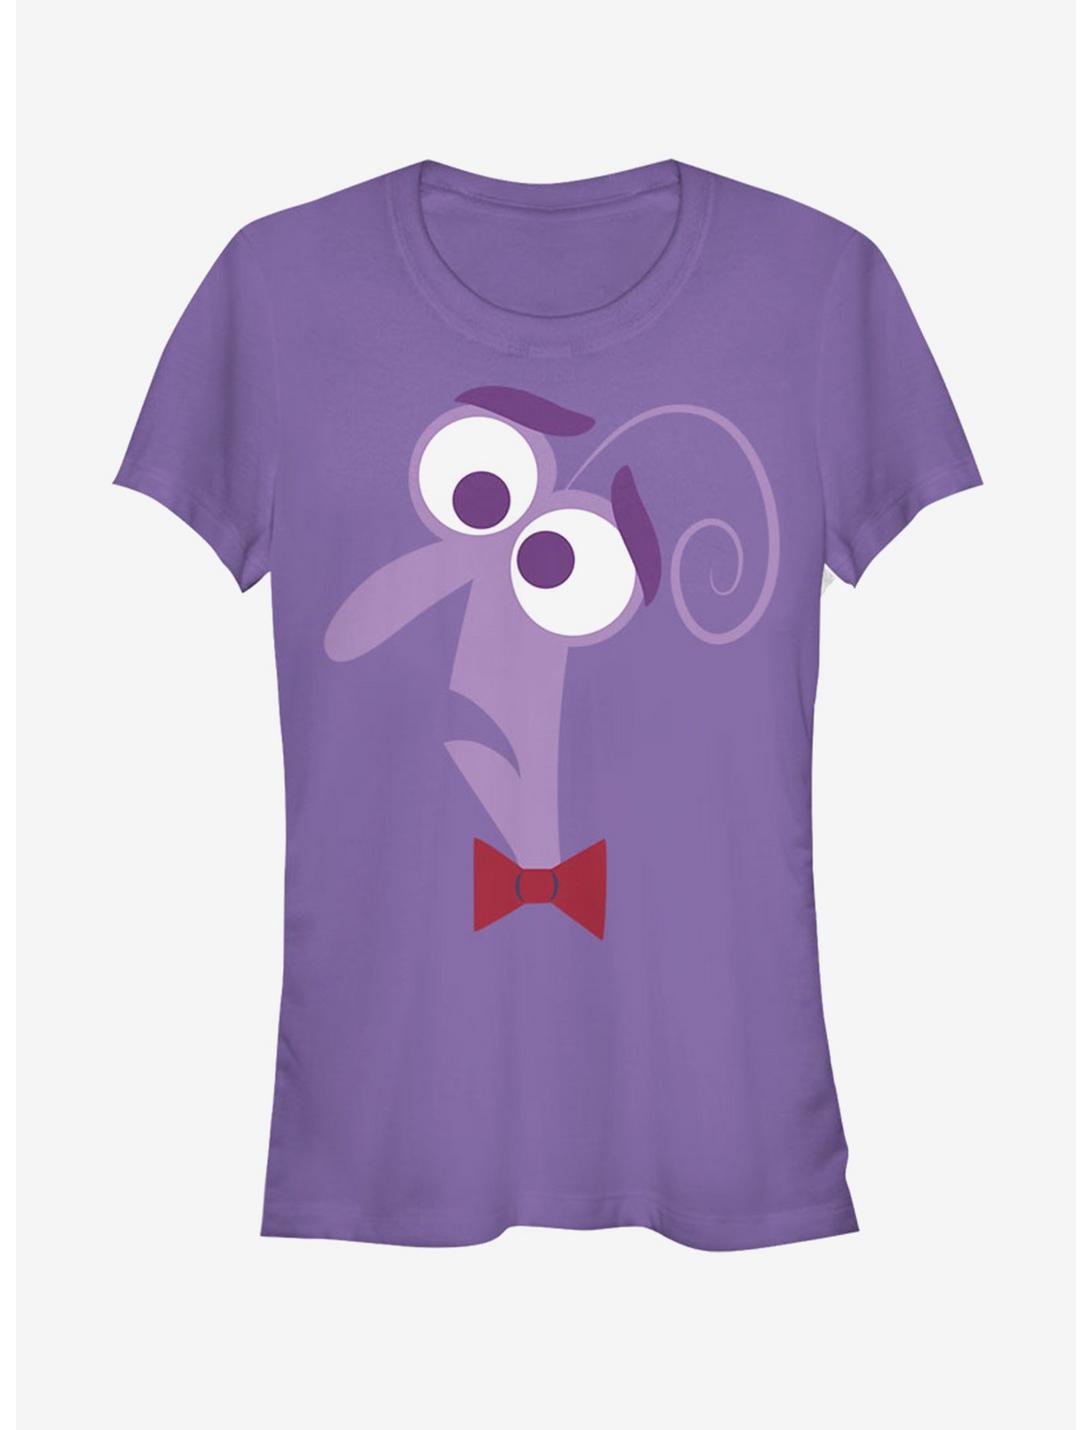 Disney Pixar Inside Out Fear Face Girls T-Shirt, PURPLE, hi-res